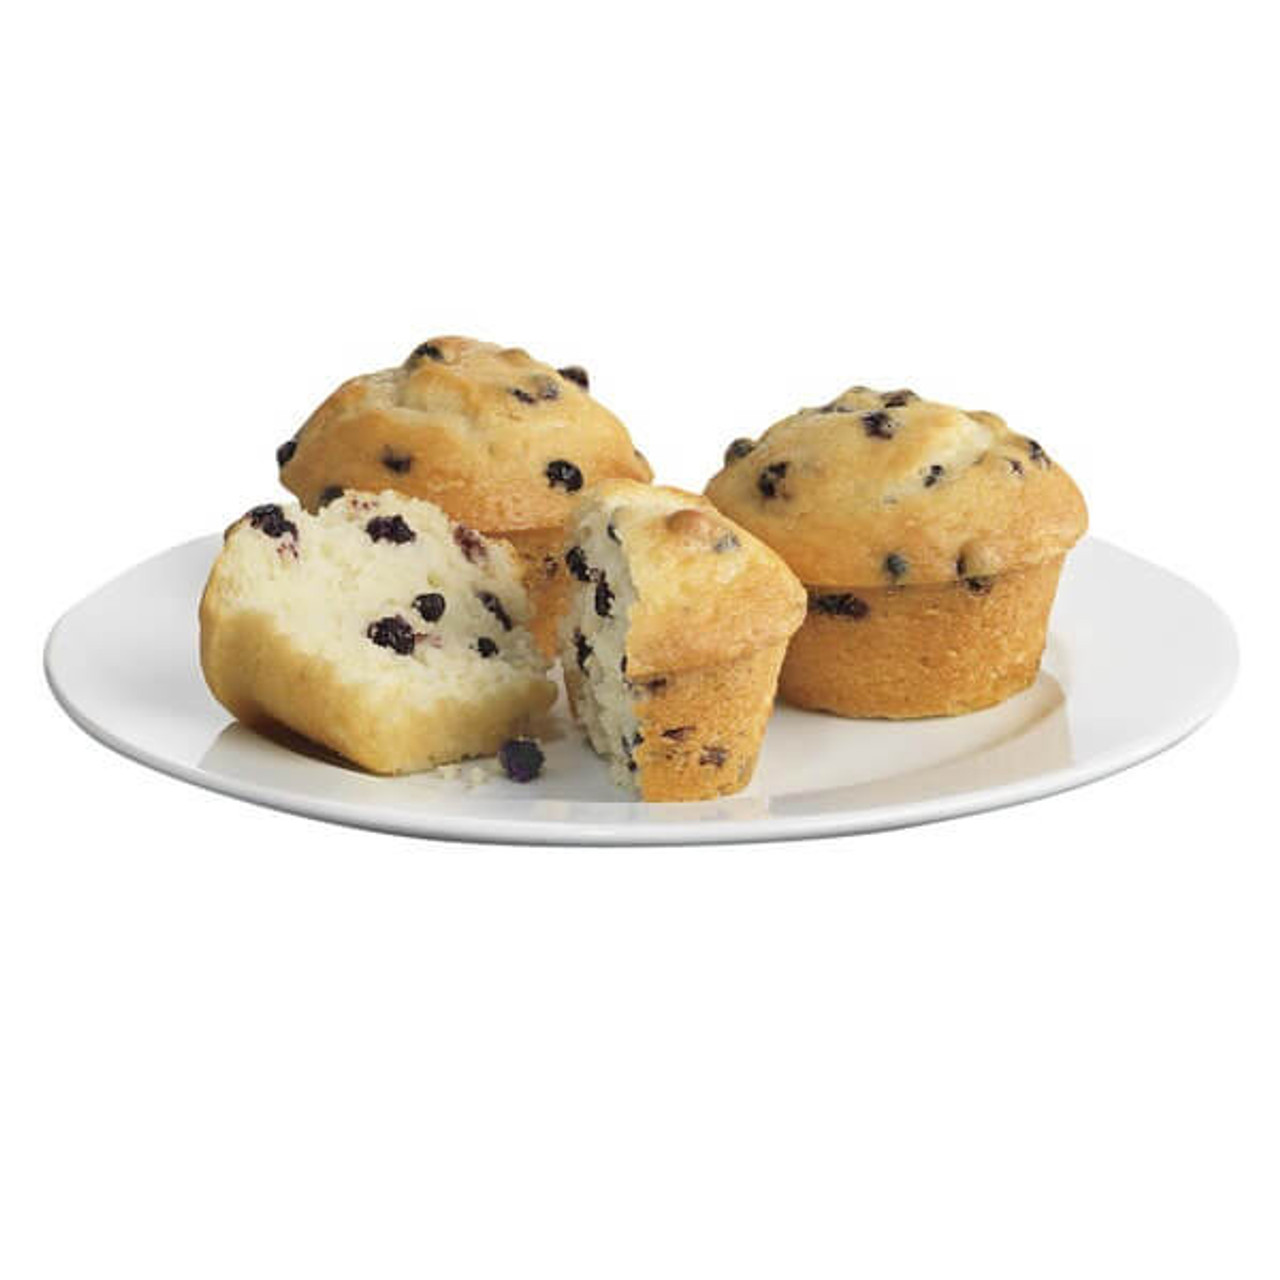 krusteaz Krusteaz Professional 5 lbs/2.26 kgs Blueberry Muffin Mix - 6/Case